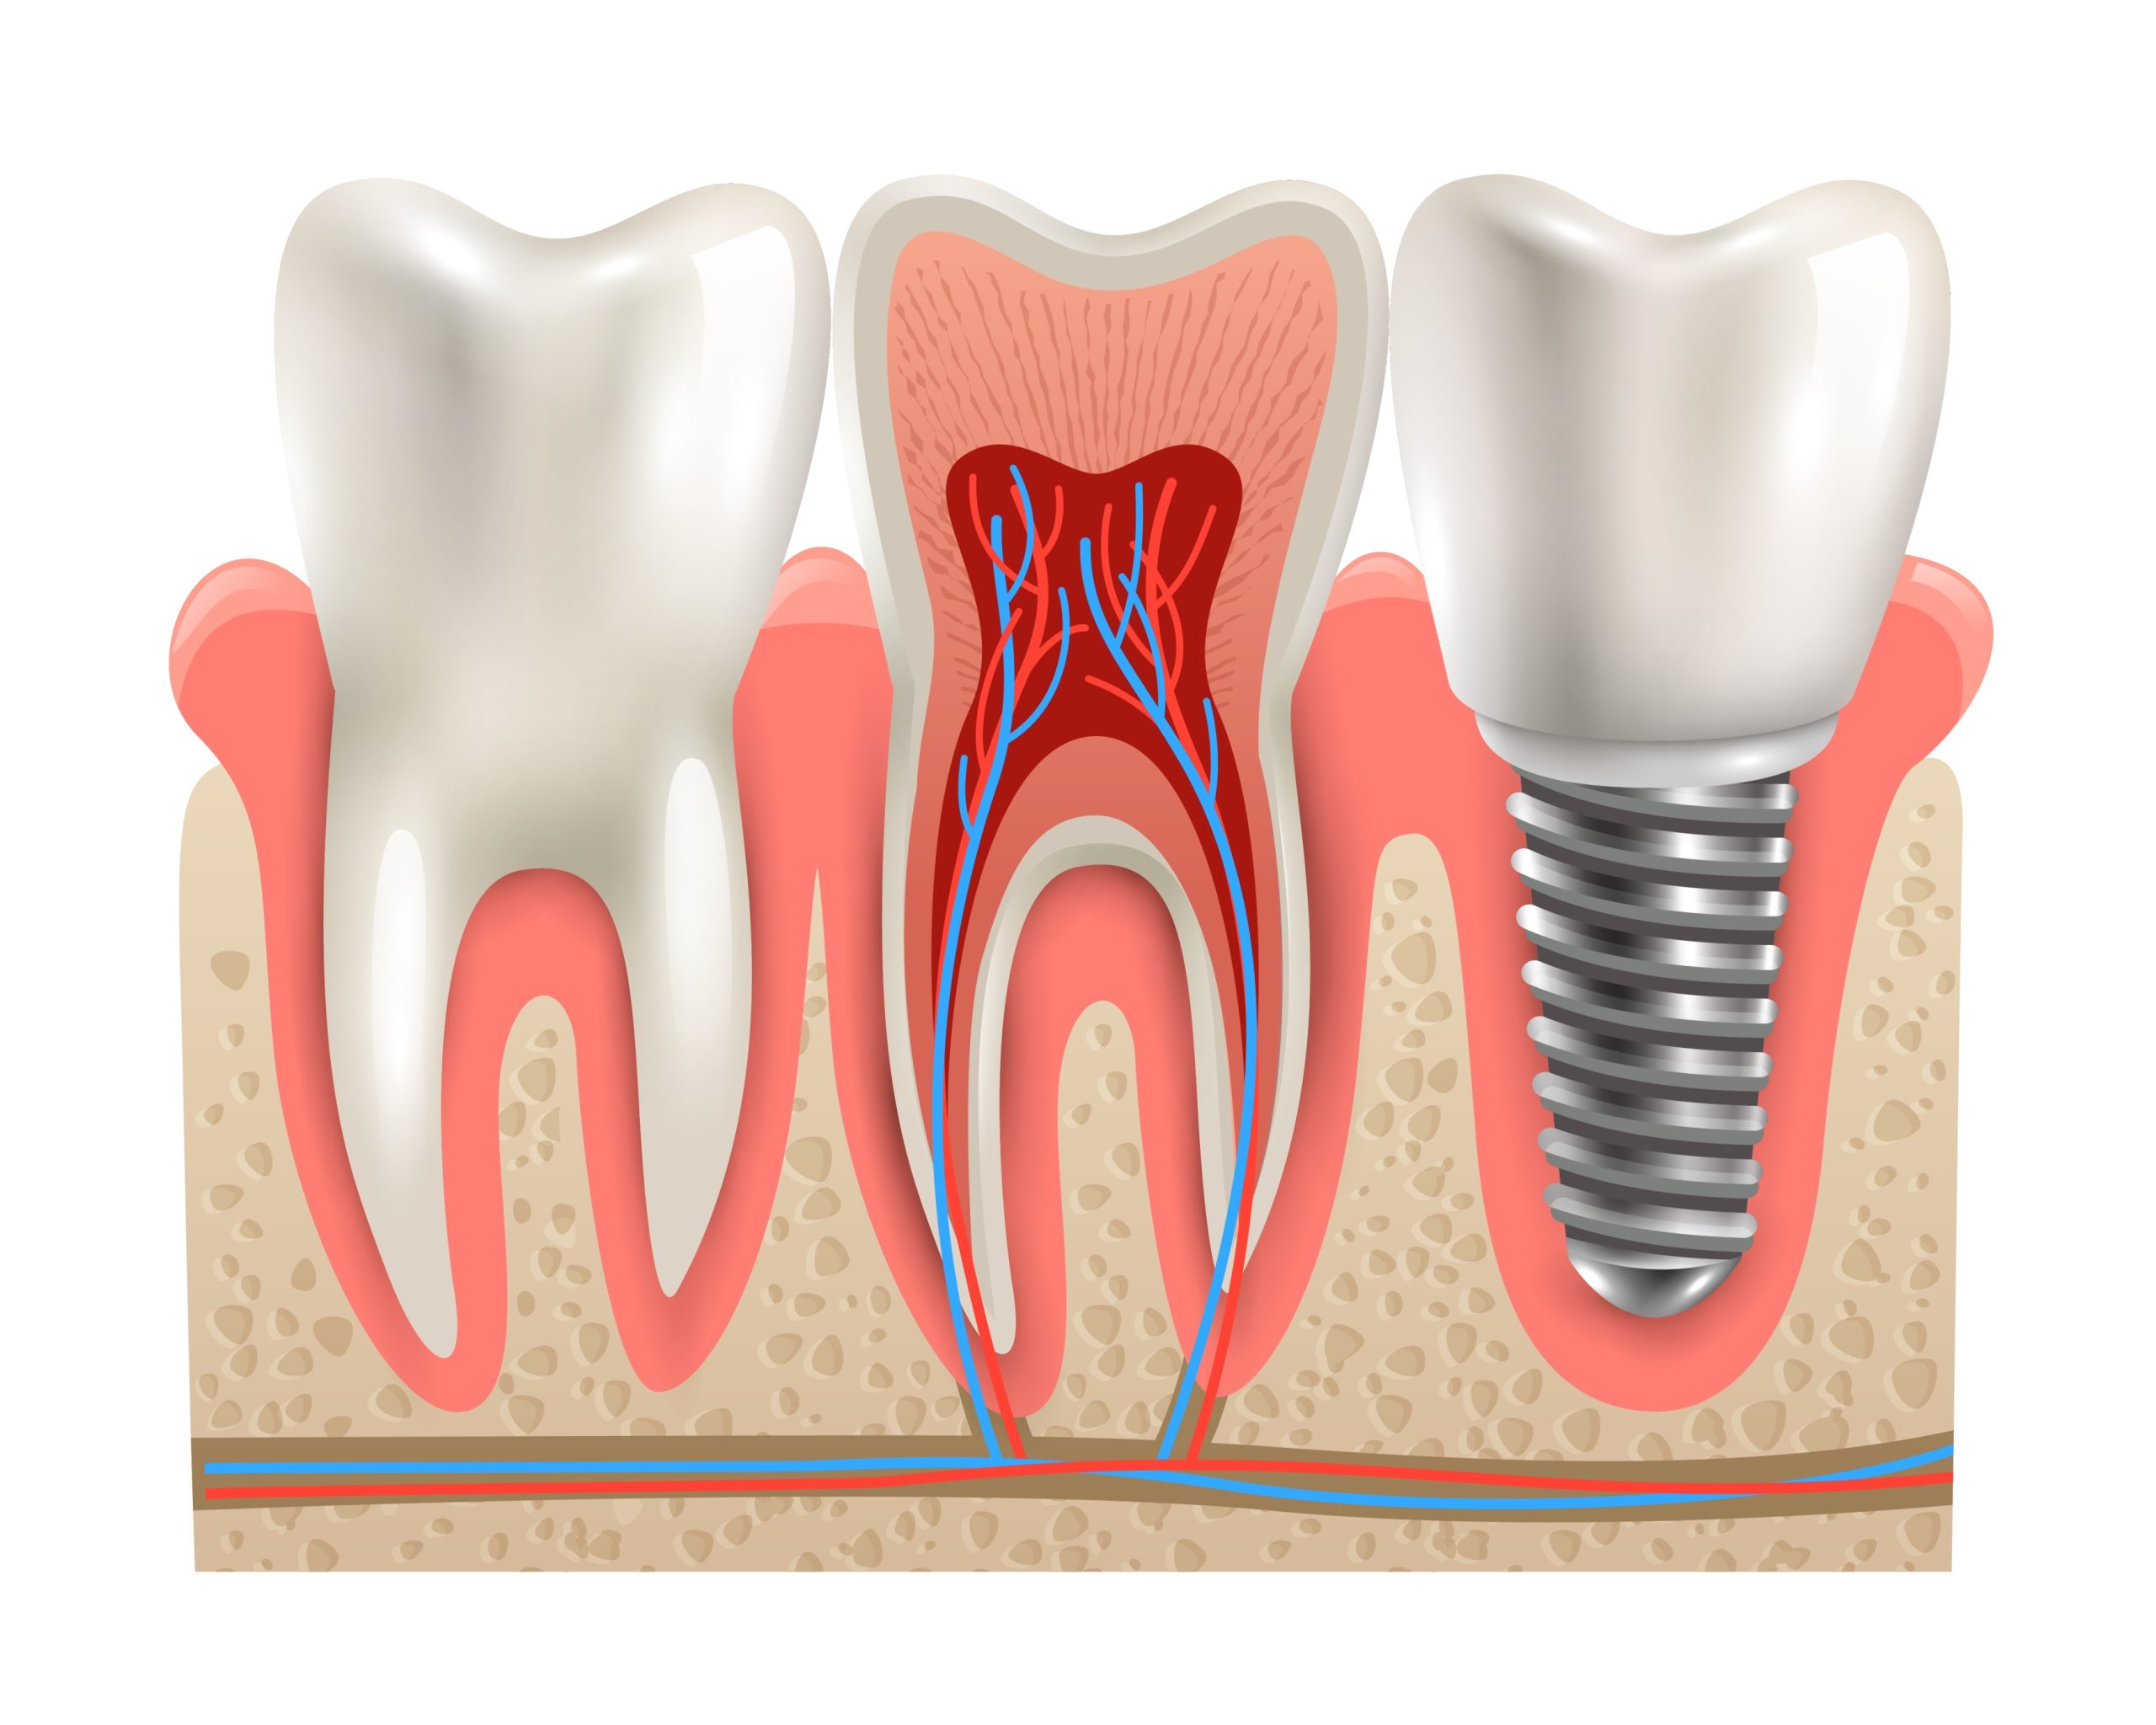 dental implants Surrey